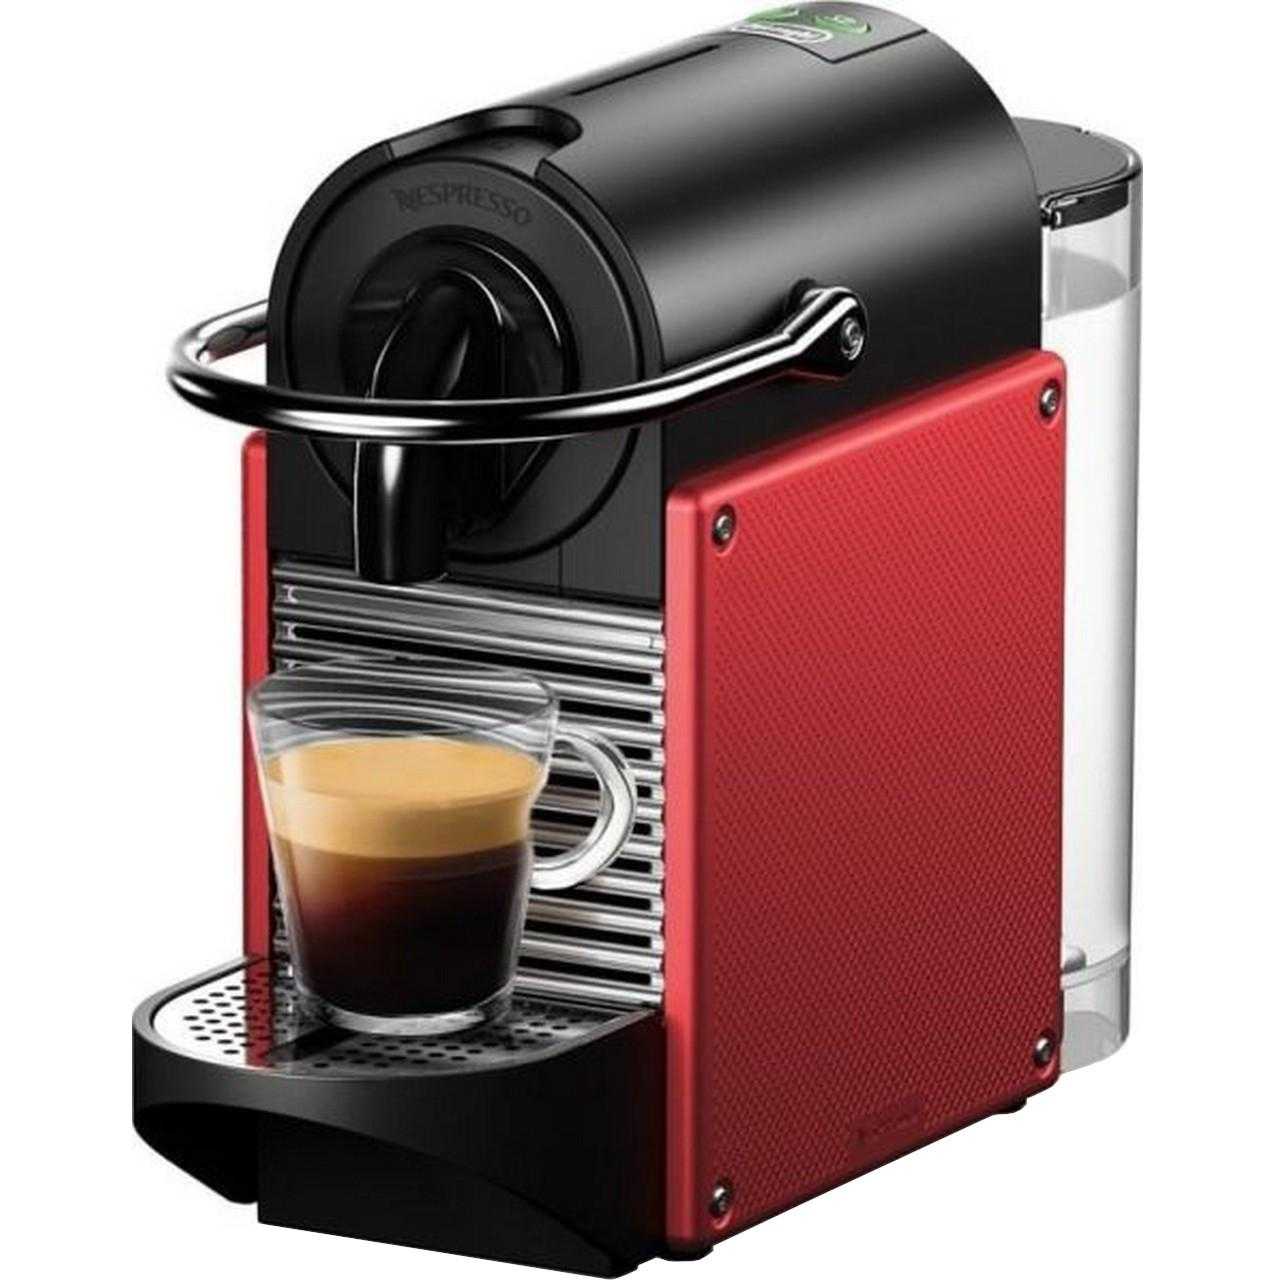  Espressor Nespresso DeLonghi Pixie Carmine EN124.R, 1260 W, 0.7 L, 19 bar, Rosu 